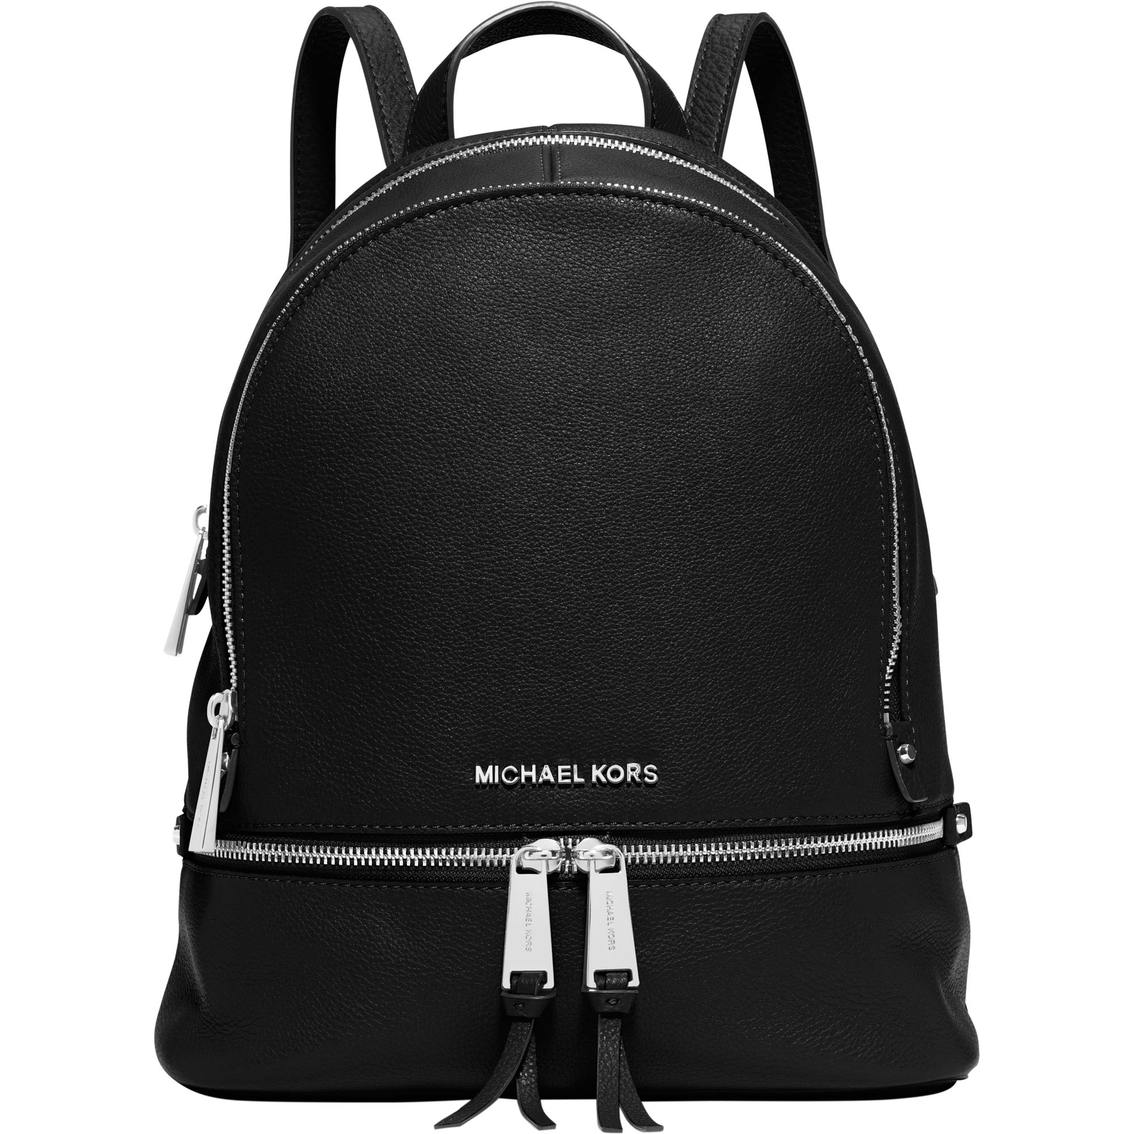 Michael Kors Rhea Zip Medium Backpack | Backpacks | Clothing ...